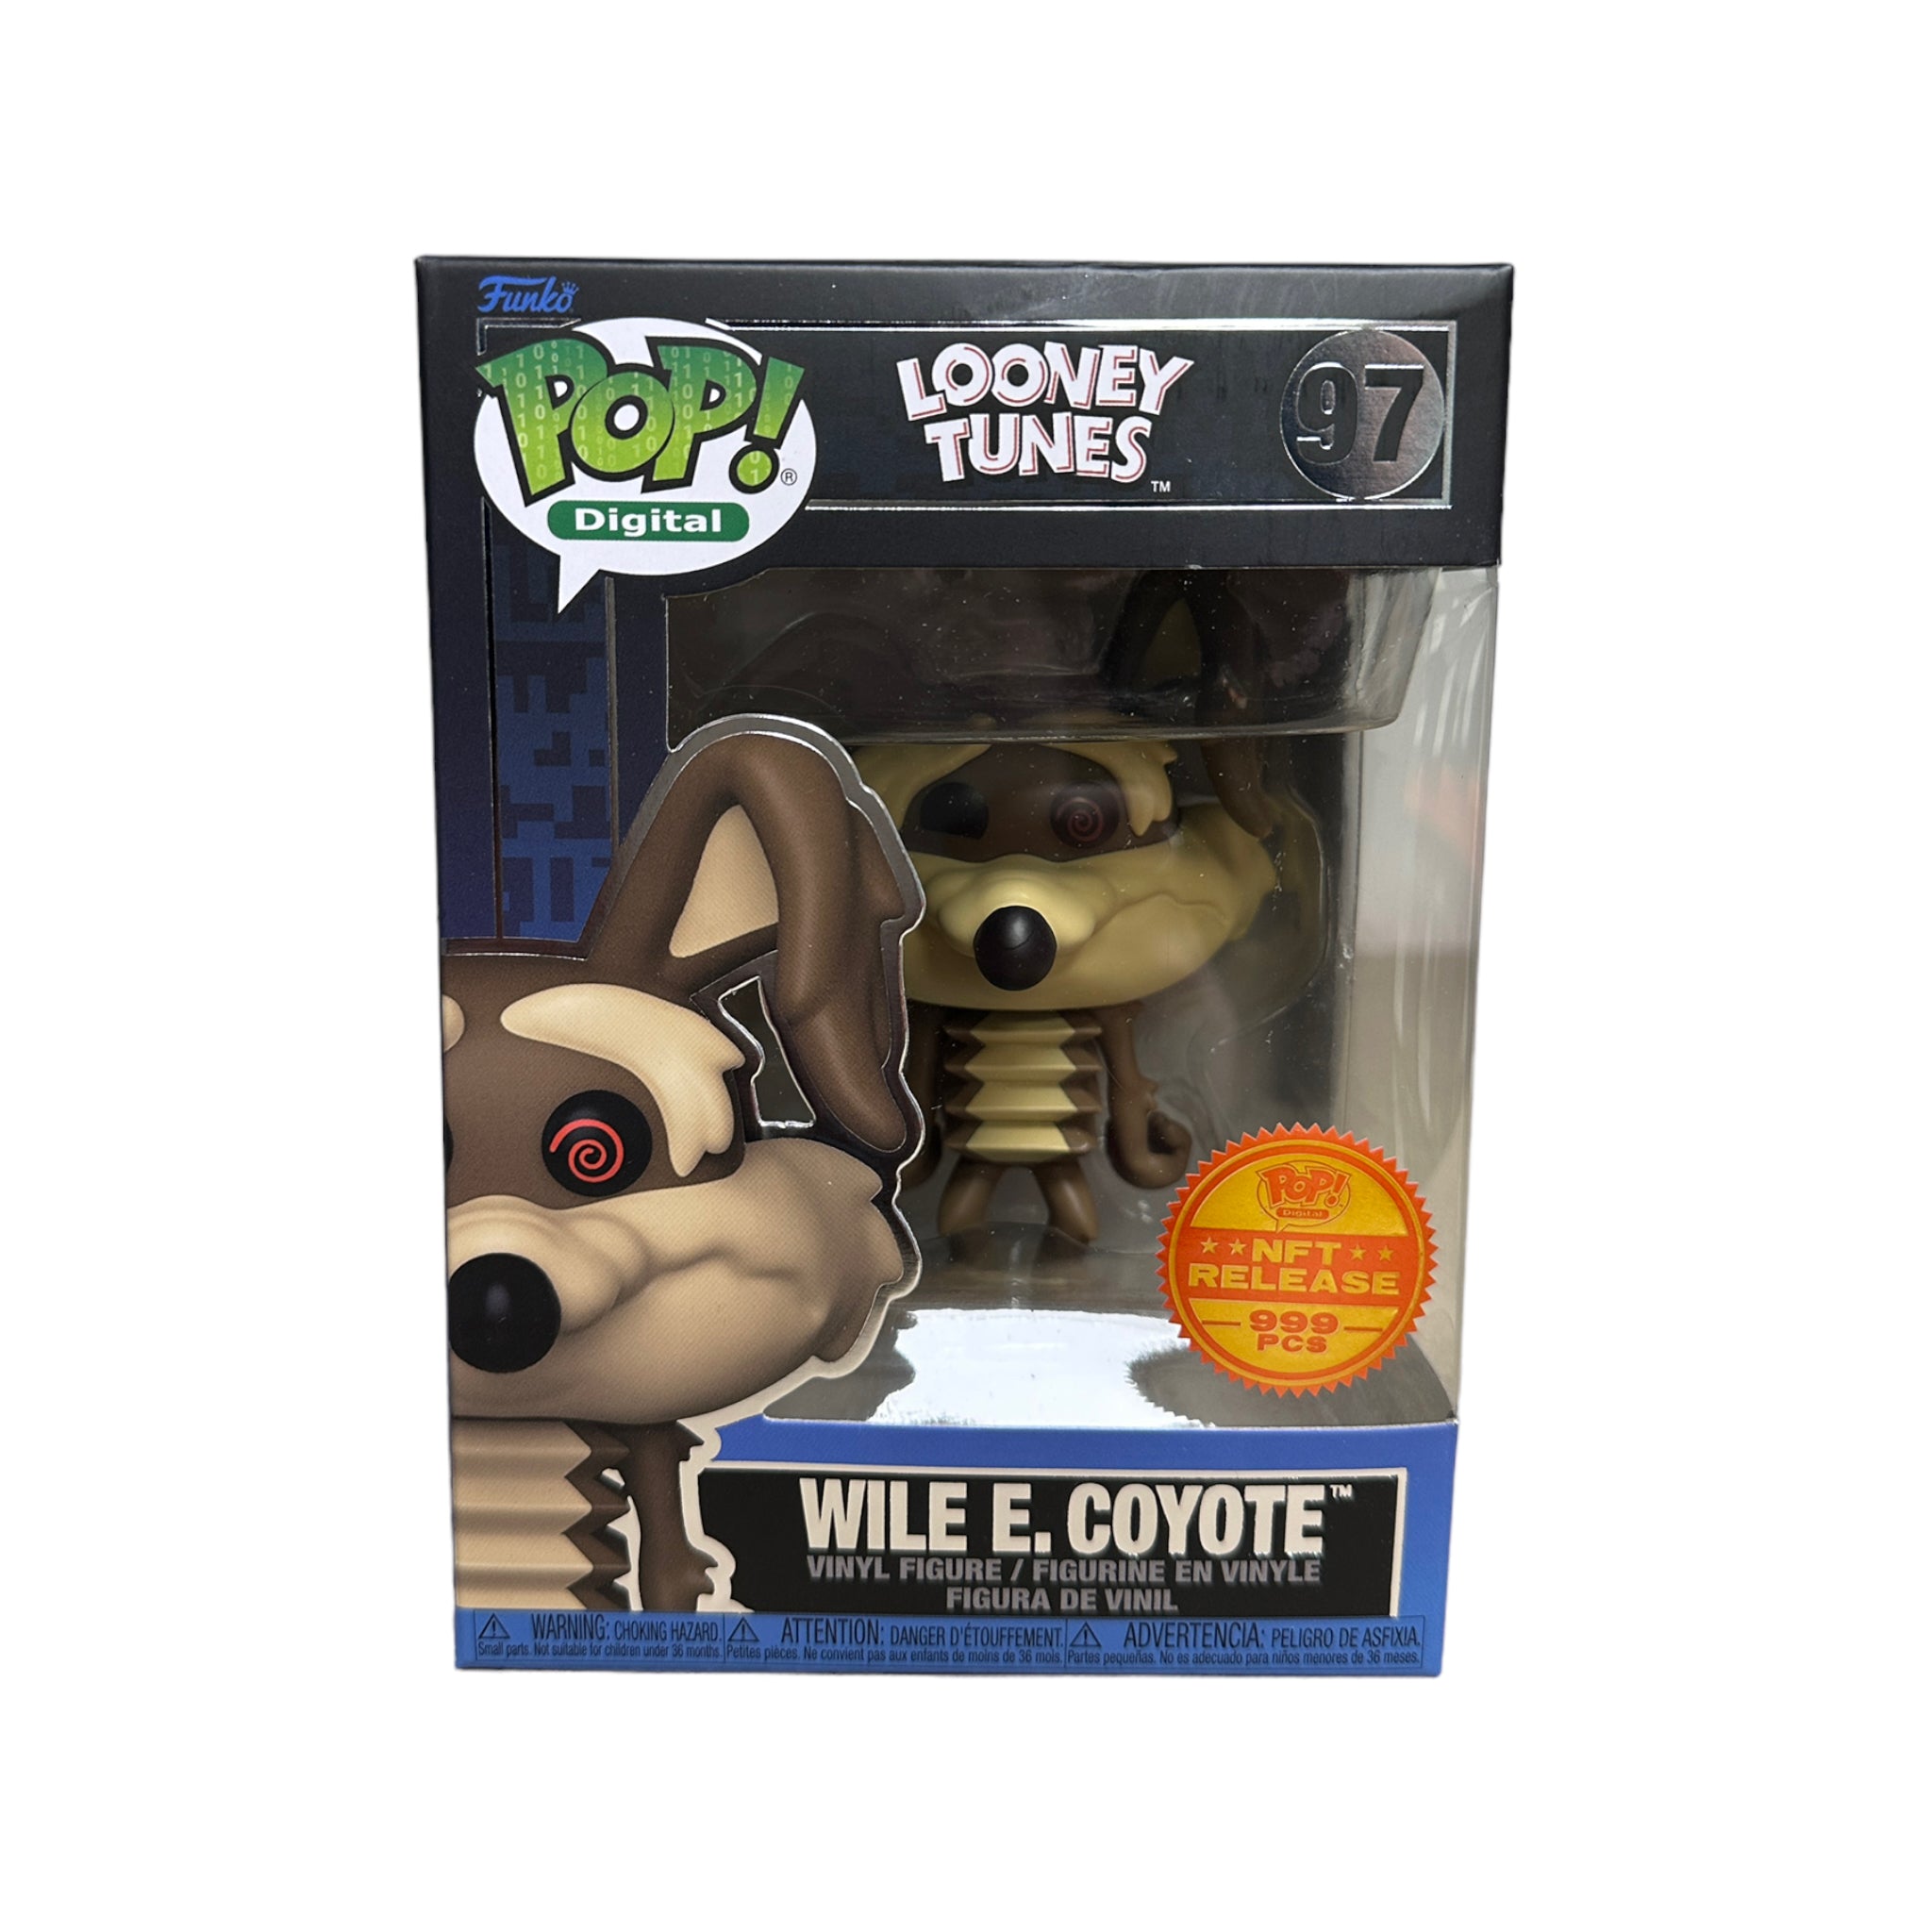 Wile E. Coyote #97 Funko Pop! - Looney Tunes - NFT Release Exclusive LE999 Pcs - Condition 8.75/10